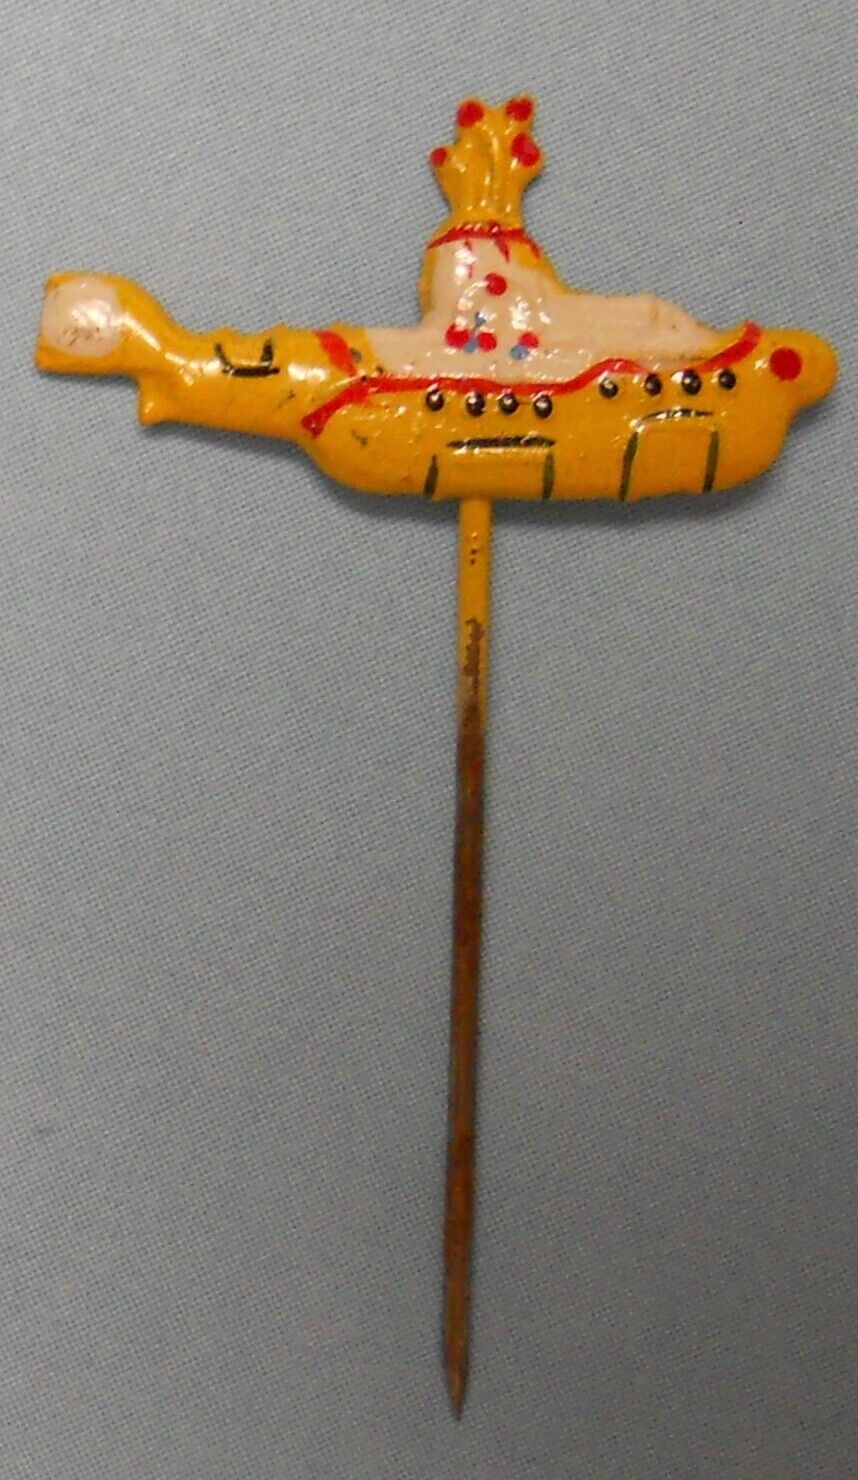 RARE Beatles Yellow Submarine stick pin 1969 Taiwan hand painted memorabilia